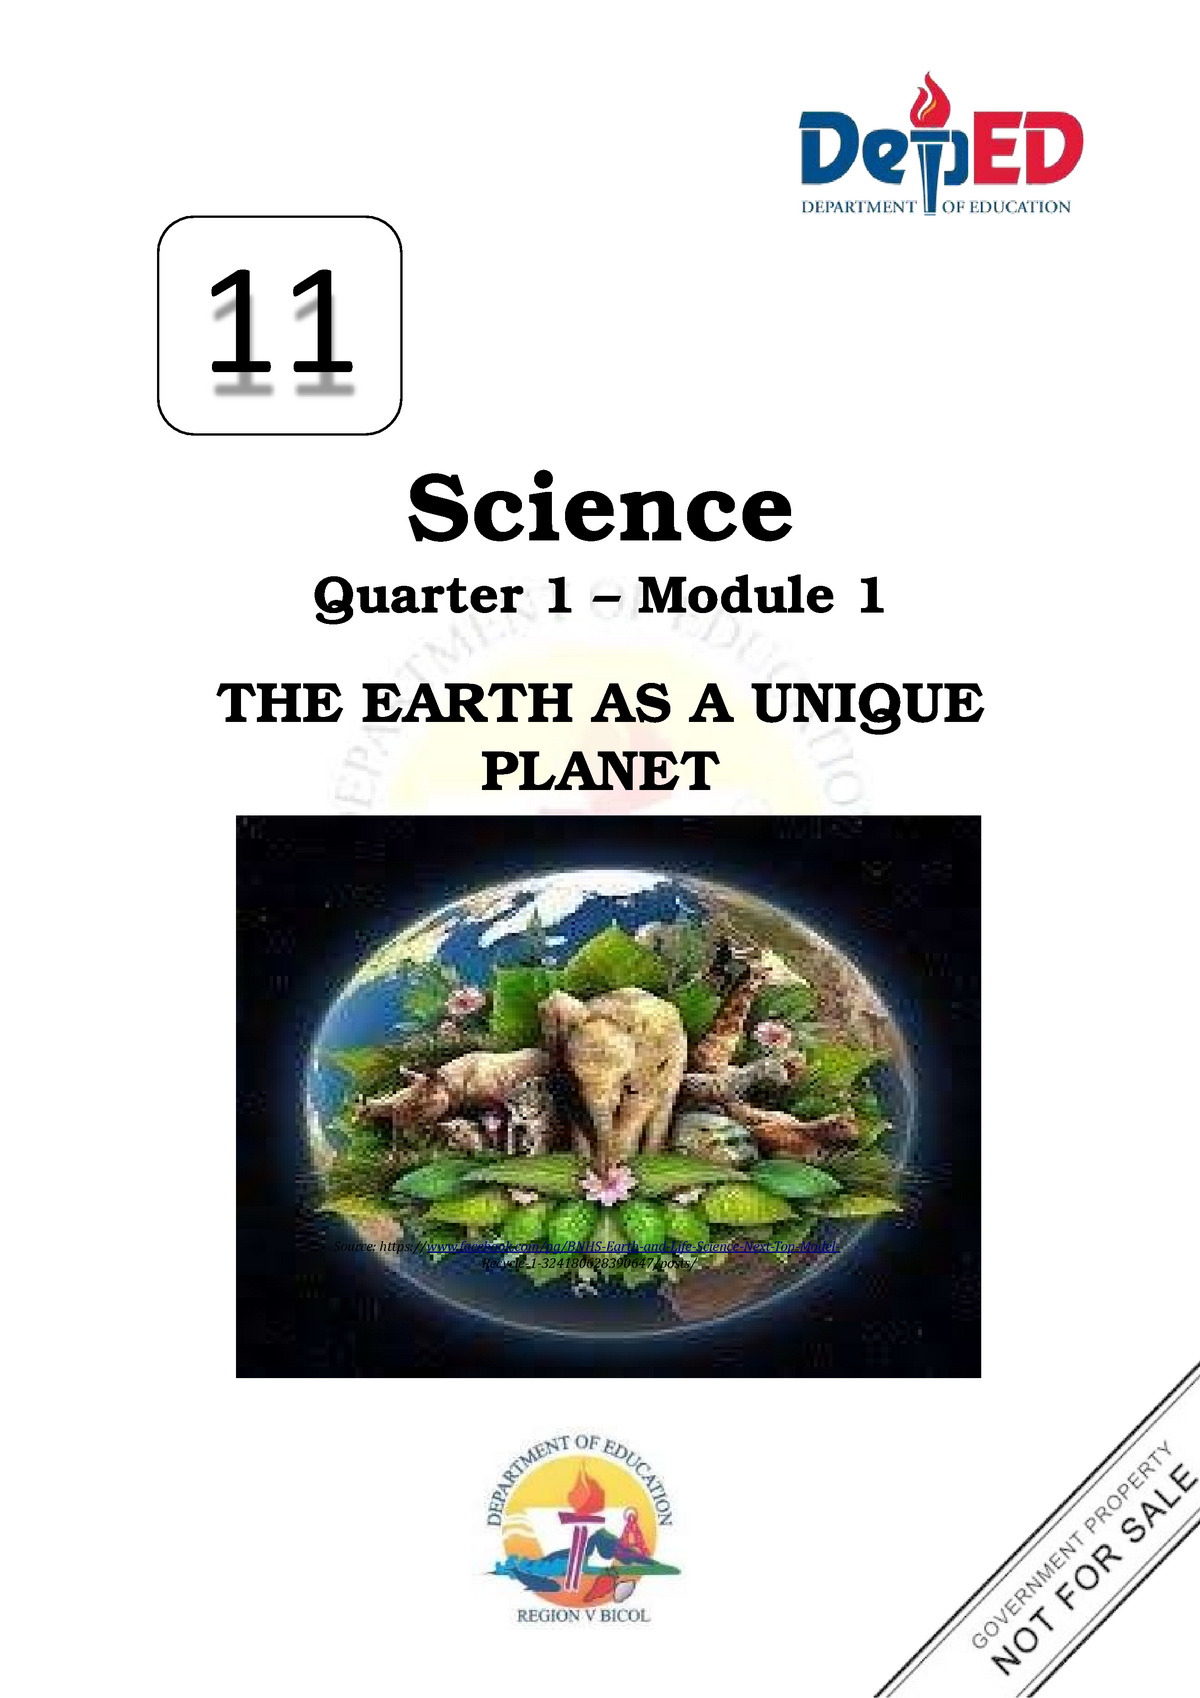 1 Core Subject Science 11 Earth Life Science Q1 Module 1183fjjjkfdds Fgjjds Dgjj Fhjjyff 5205